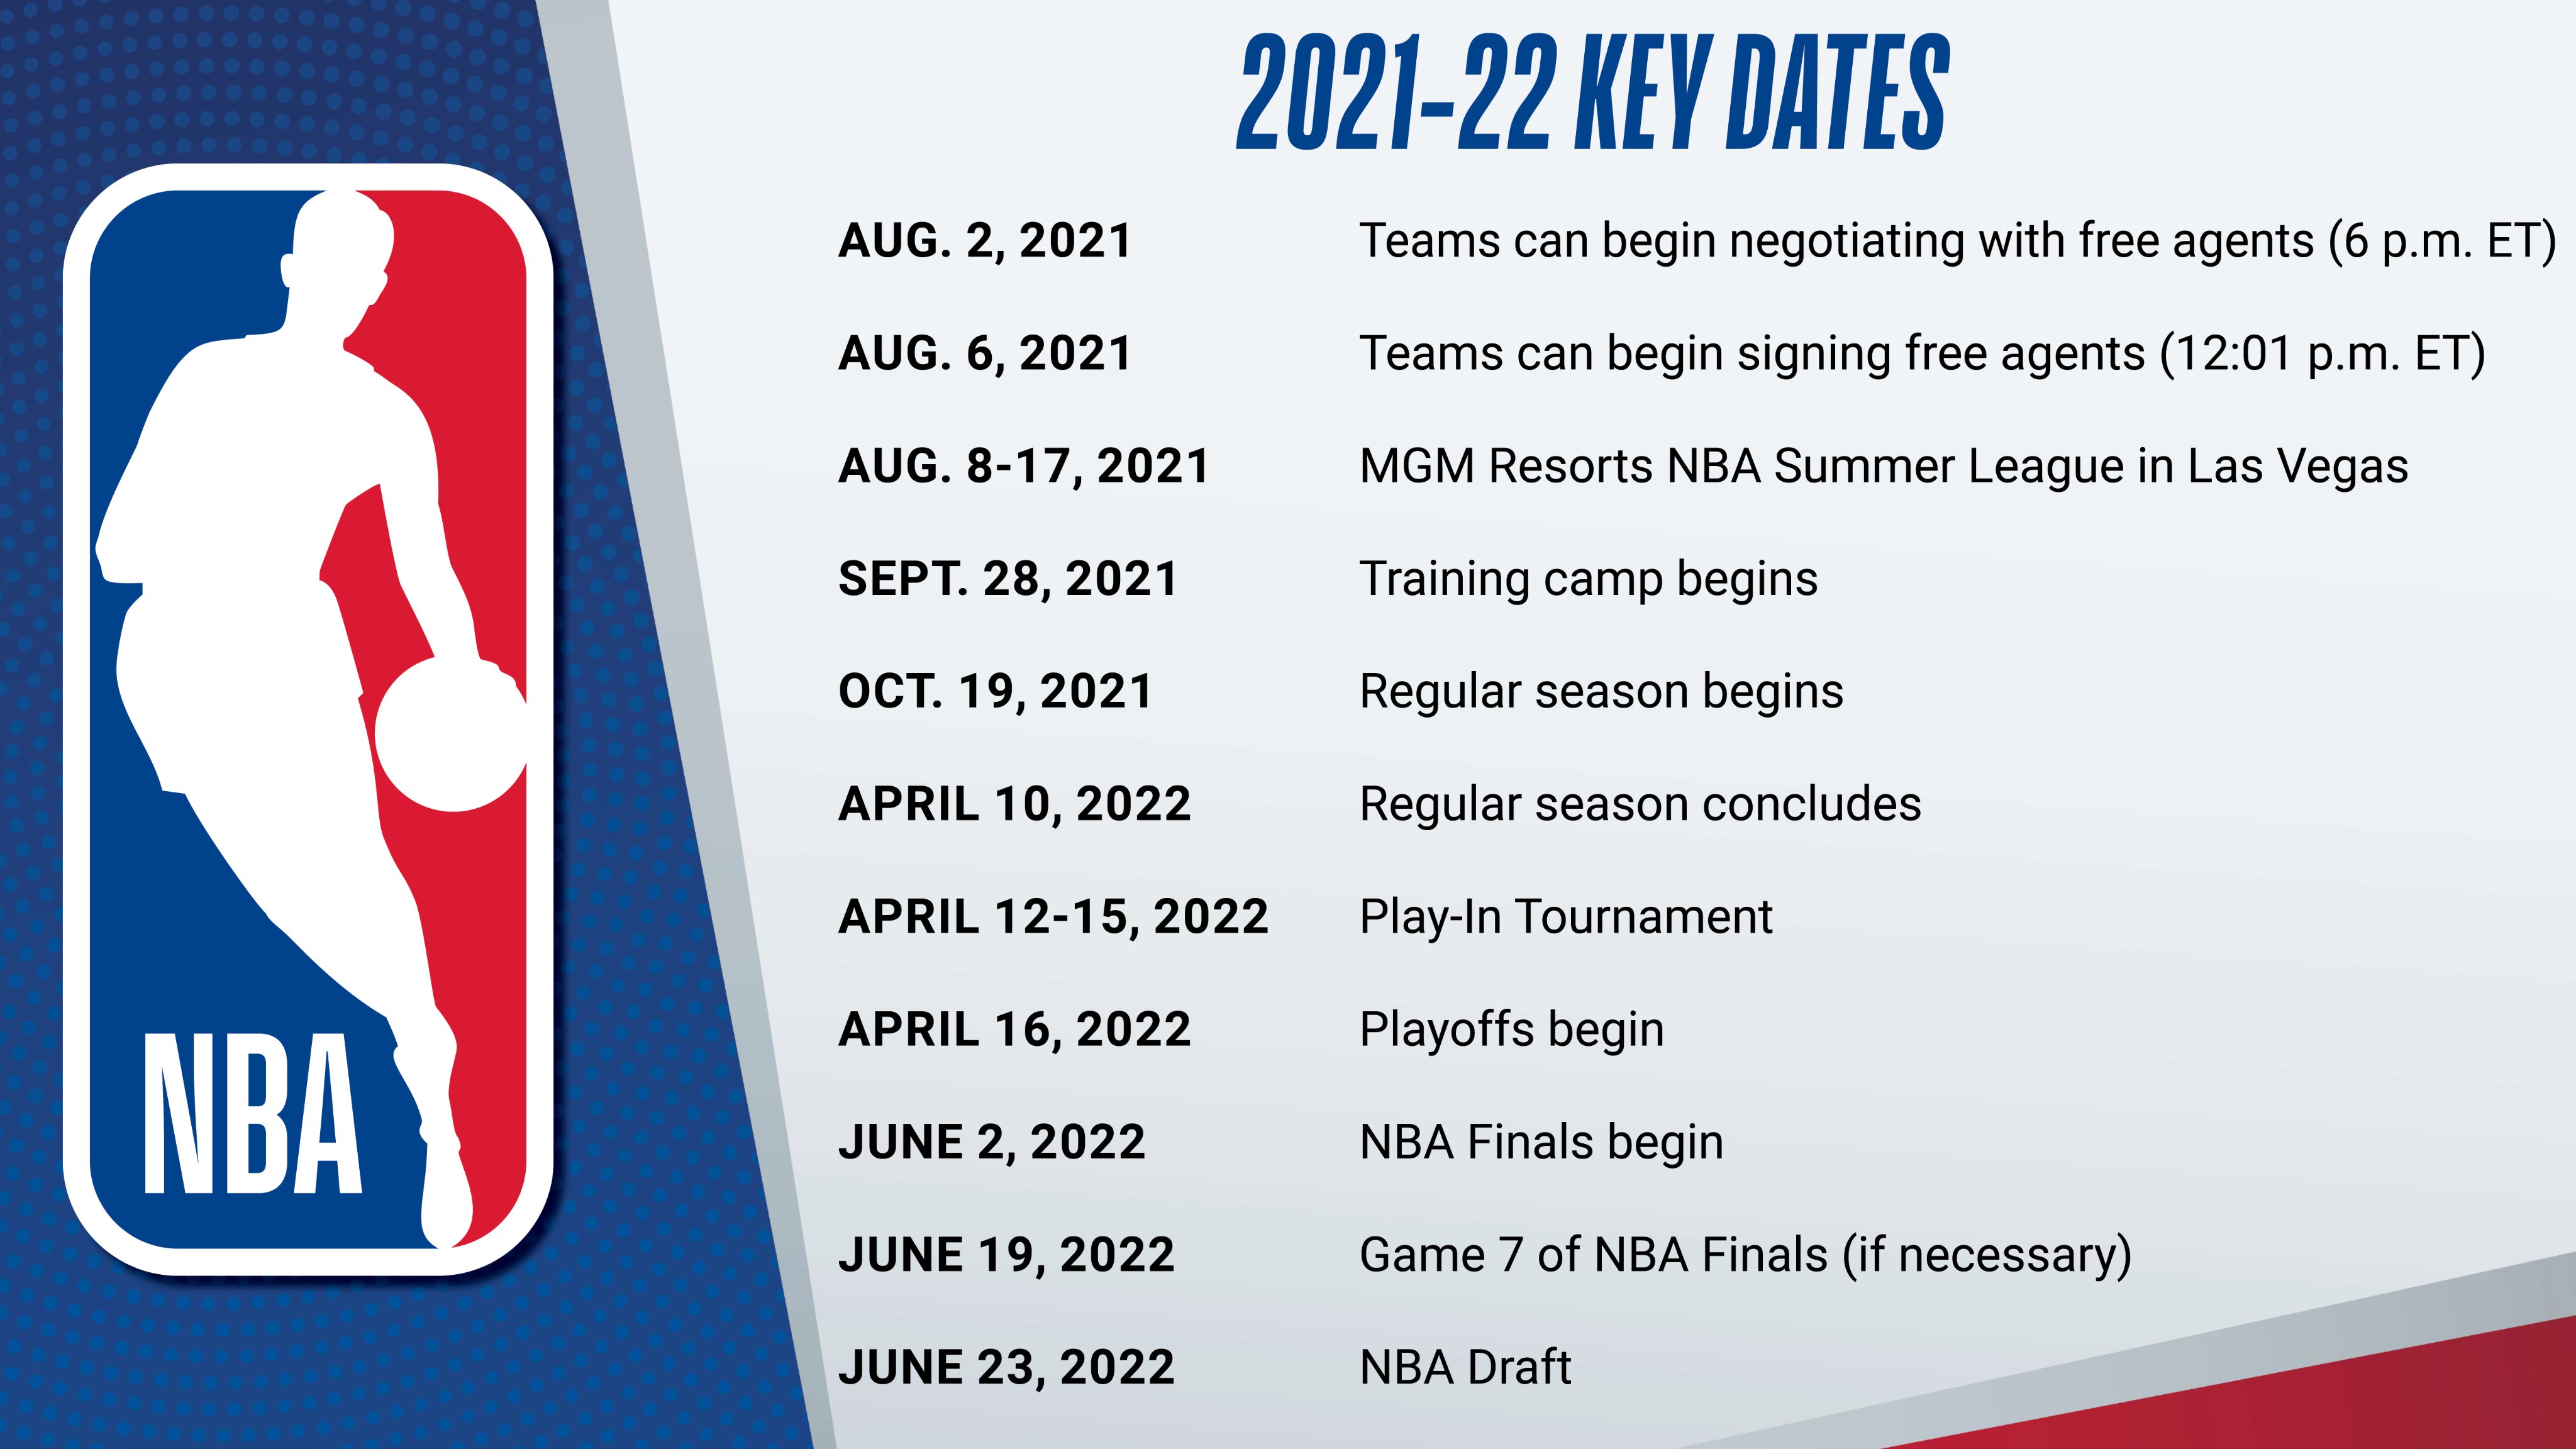 Nba Schedule 2022 Nba Communications On Twitter: "Key Dates For The 2021-22 Nba Season ⬇️  Https://T.co/Nbwcivrhzh" / Twitter